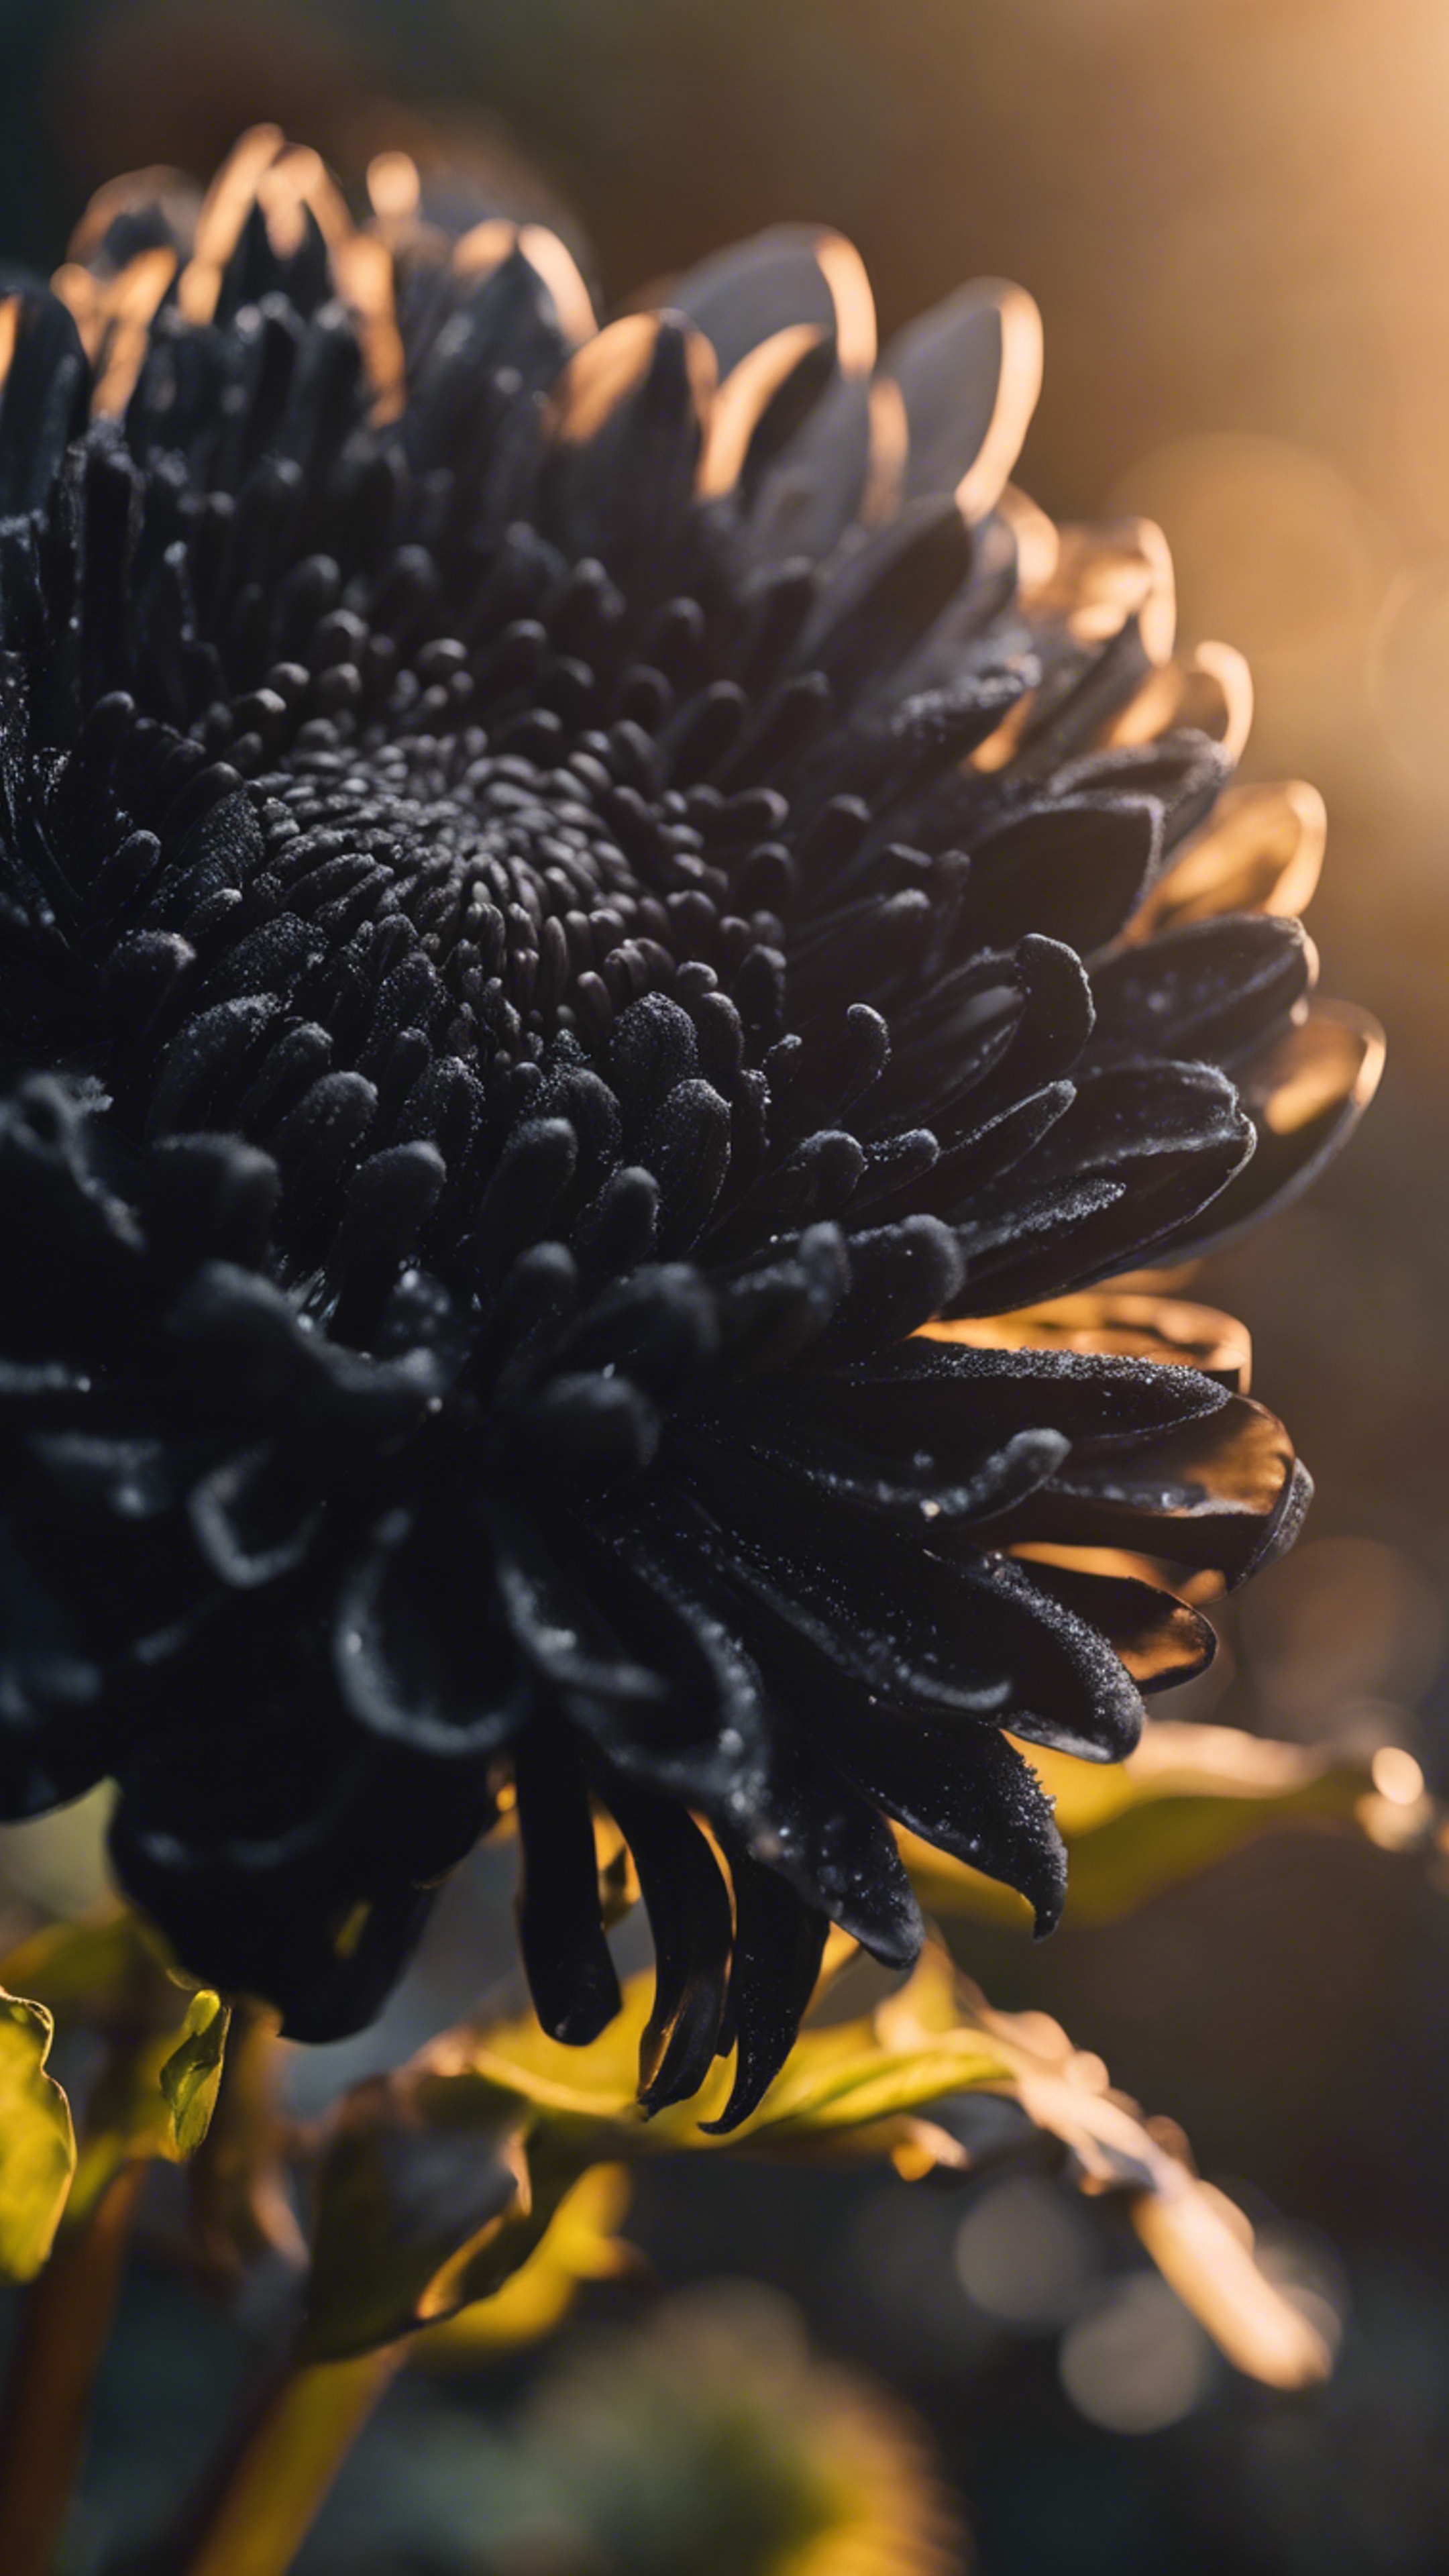 An ethereal black chrysanthemum with intricate petals against a backdrop of the setting sun. Divar kağızı[4b40c3df292a42548d77]